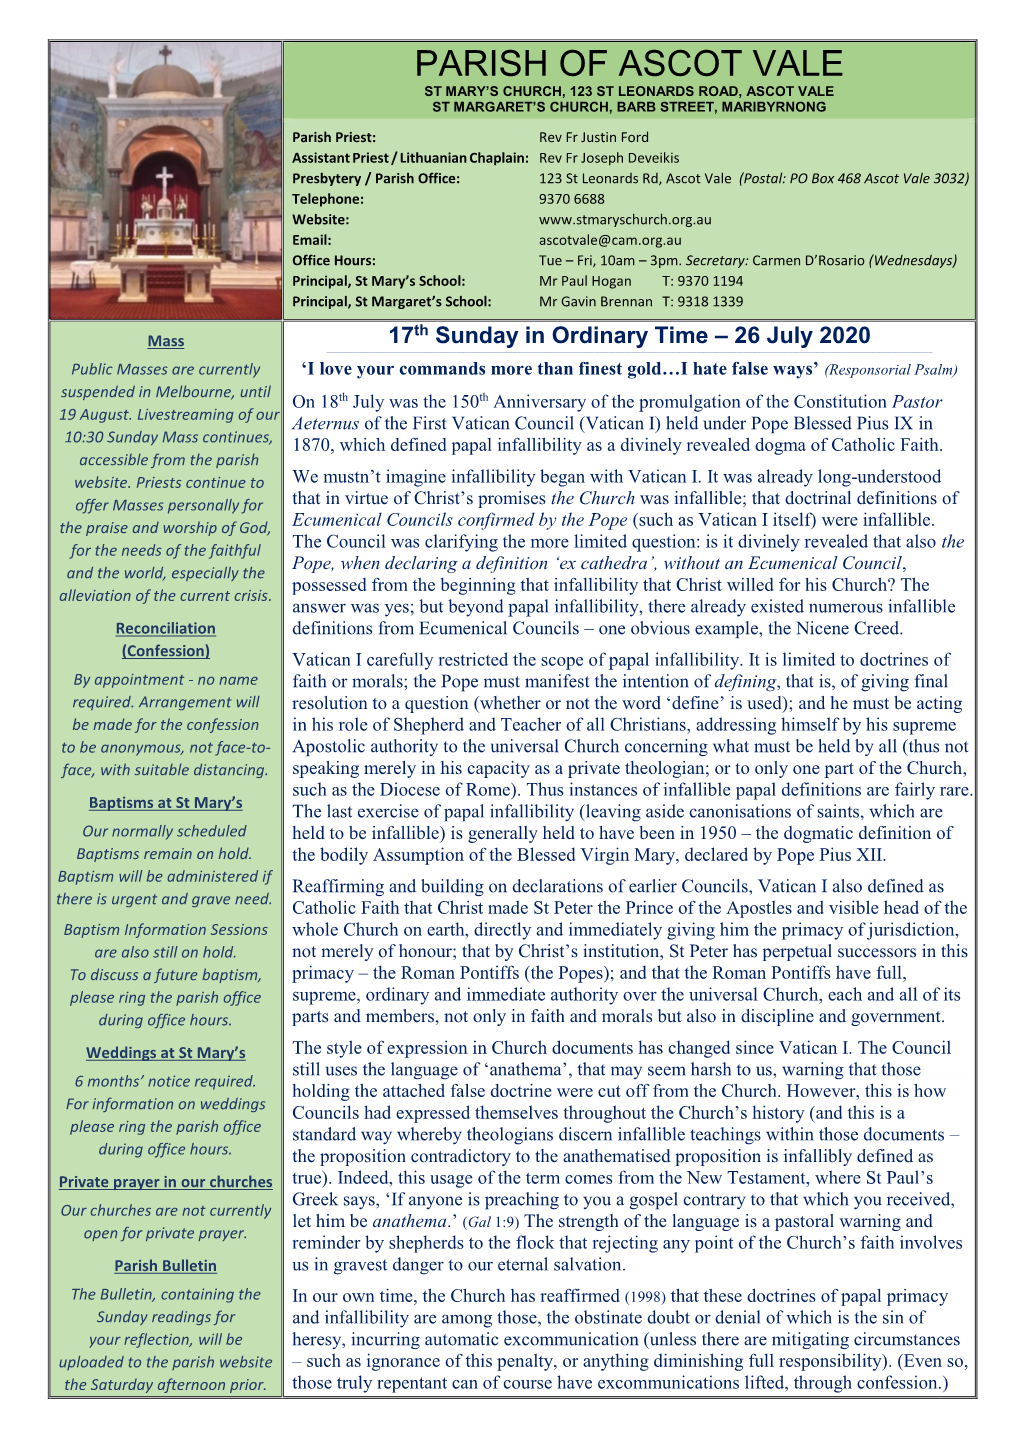 Parish Bulletin, 26 July 2020